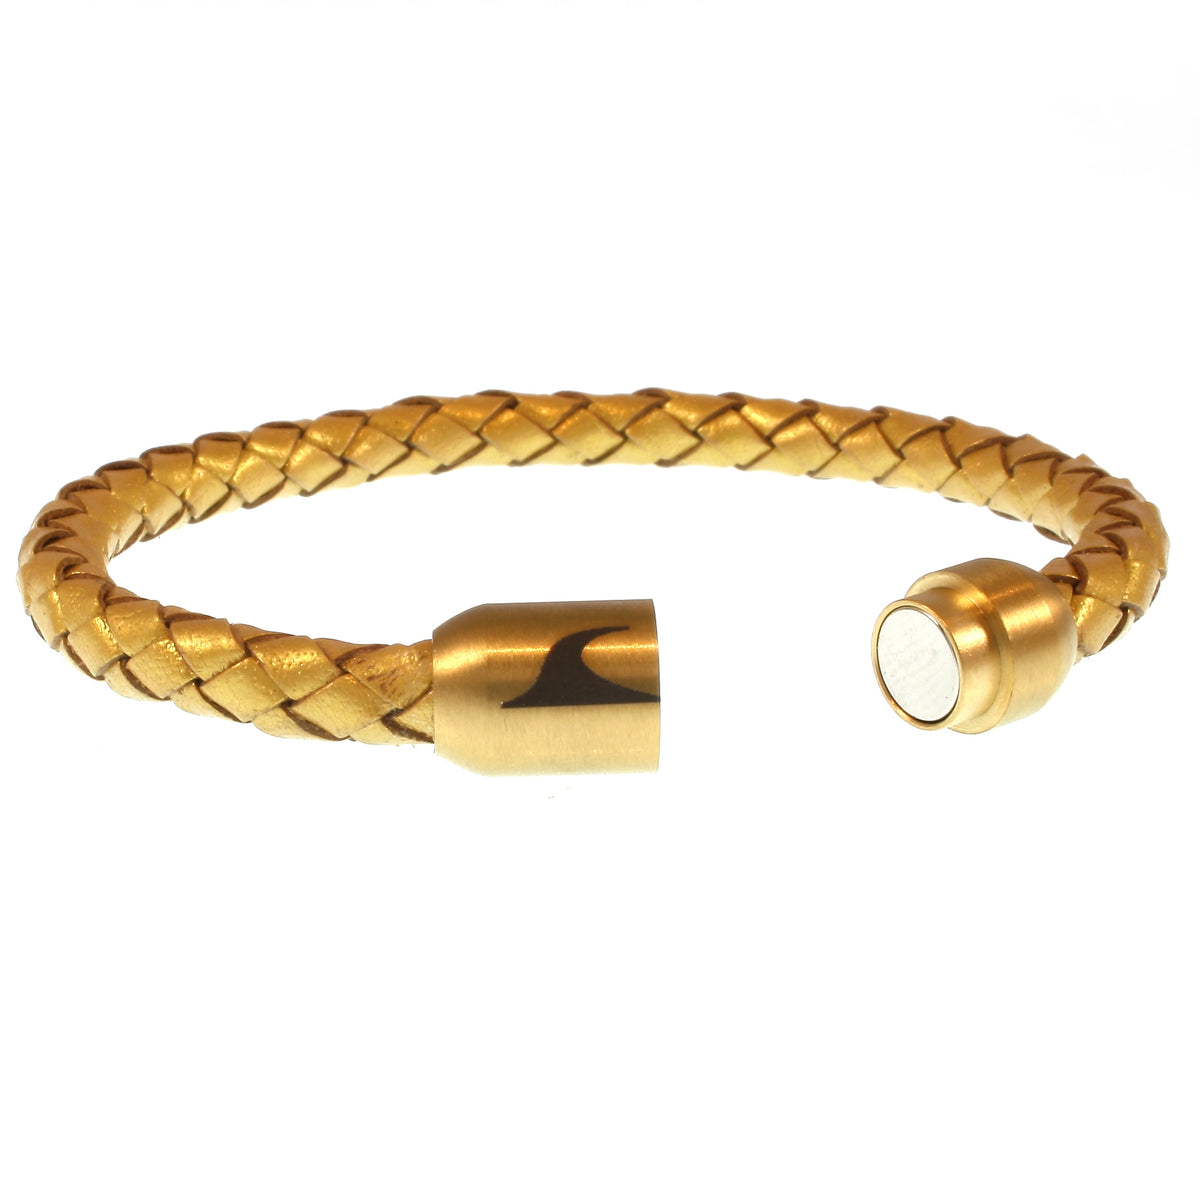 Herren-leder-armband-damen-sylt-gold-geflochten-Edelstahlverschluss-offen-wavepirate-shop-f